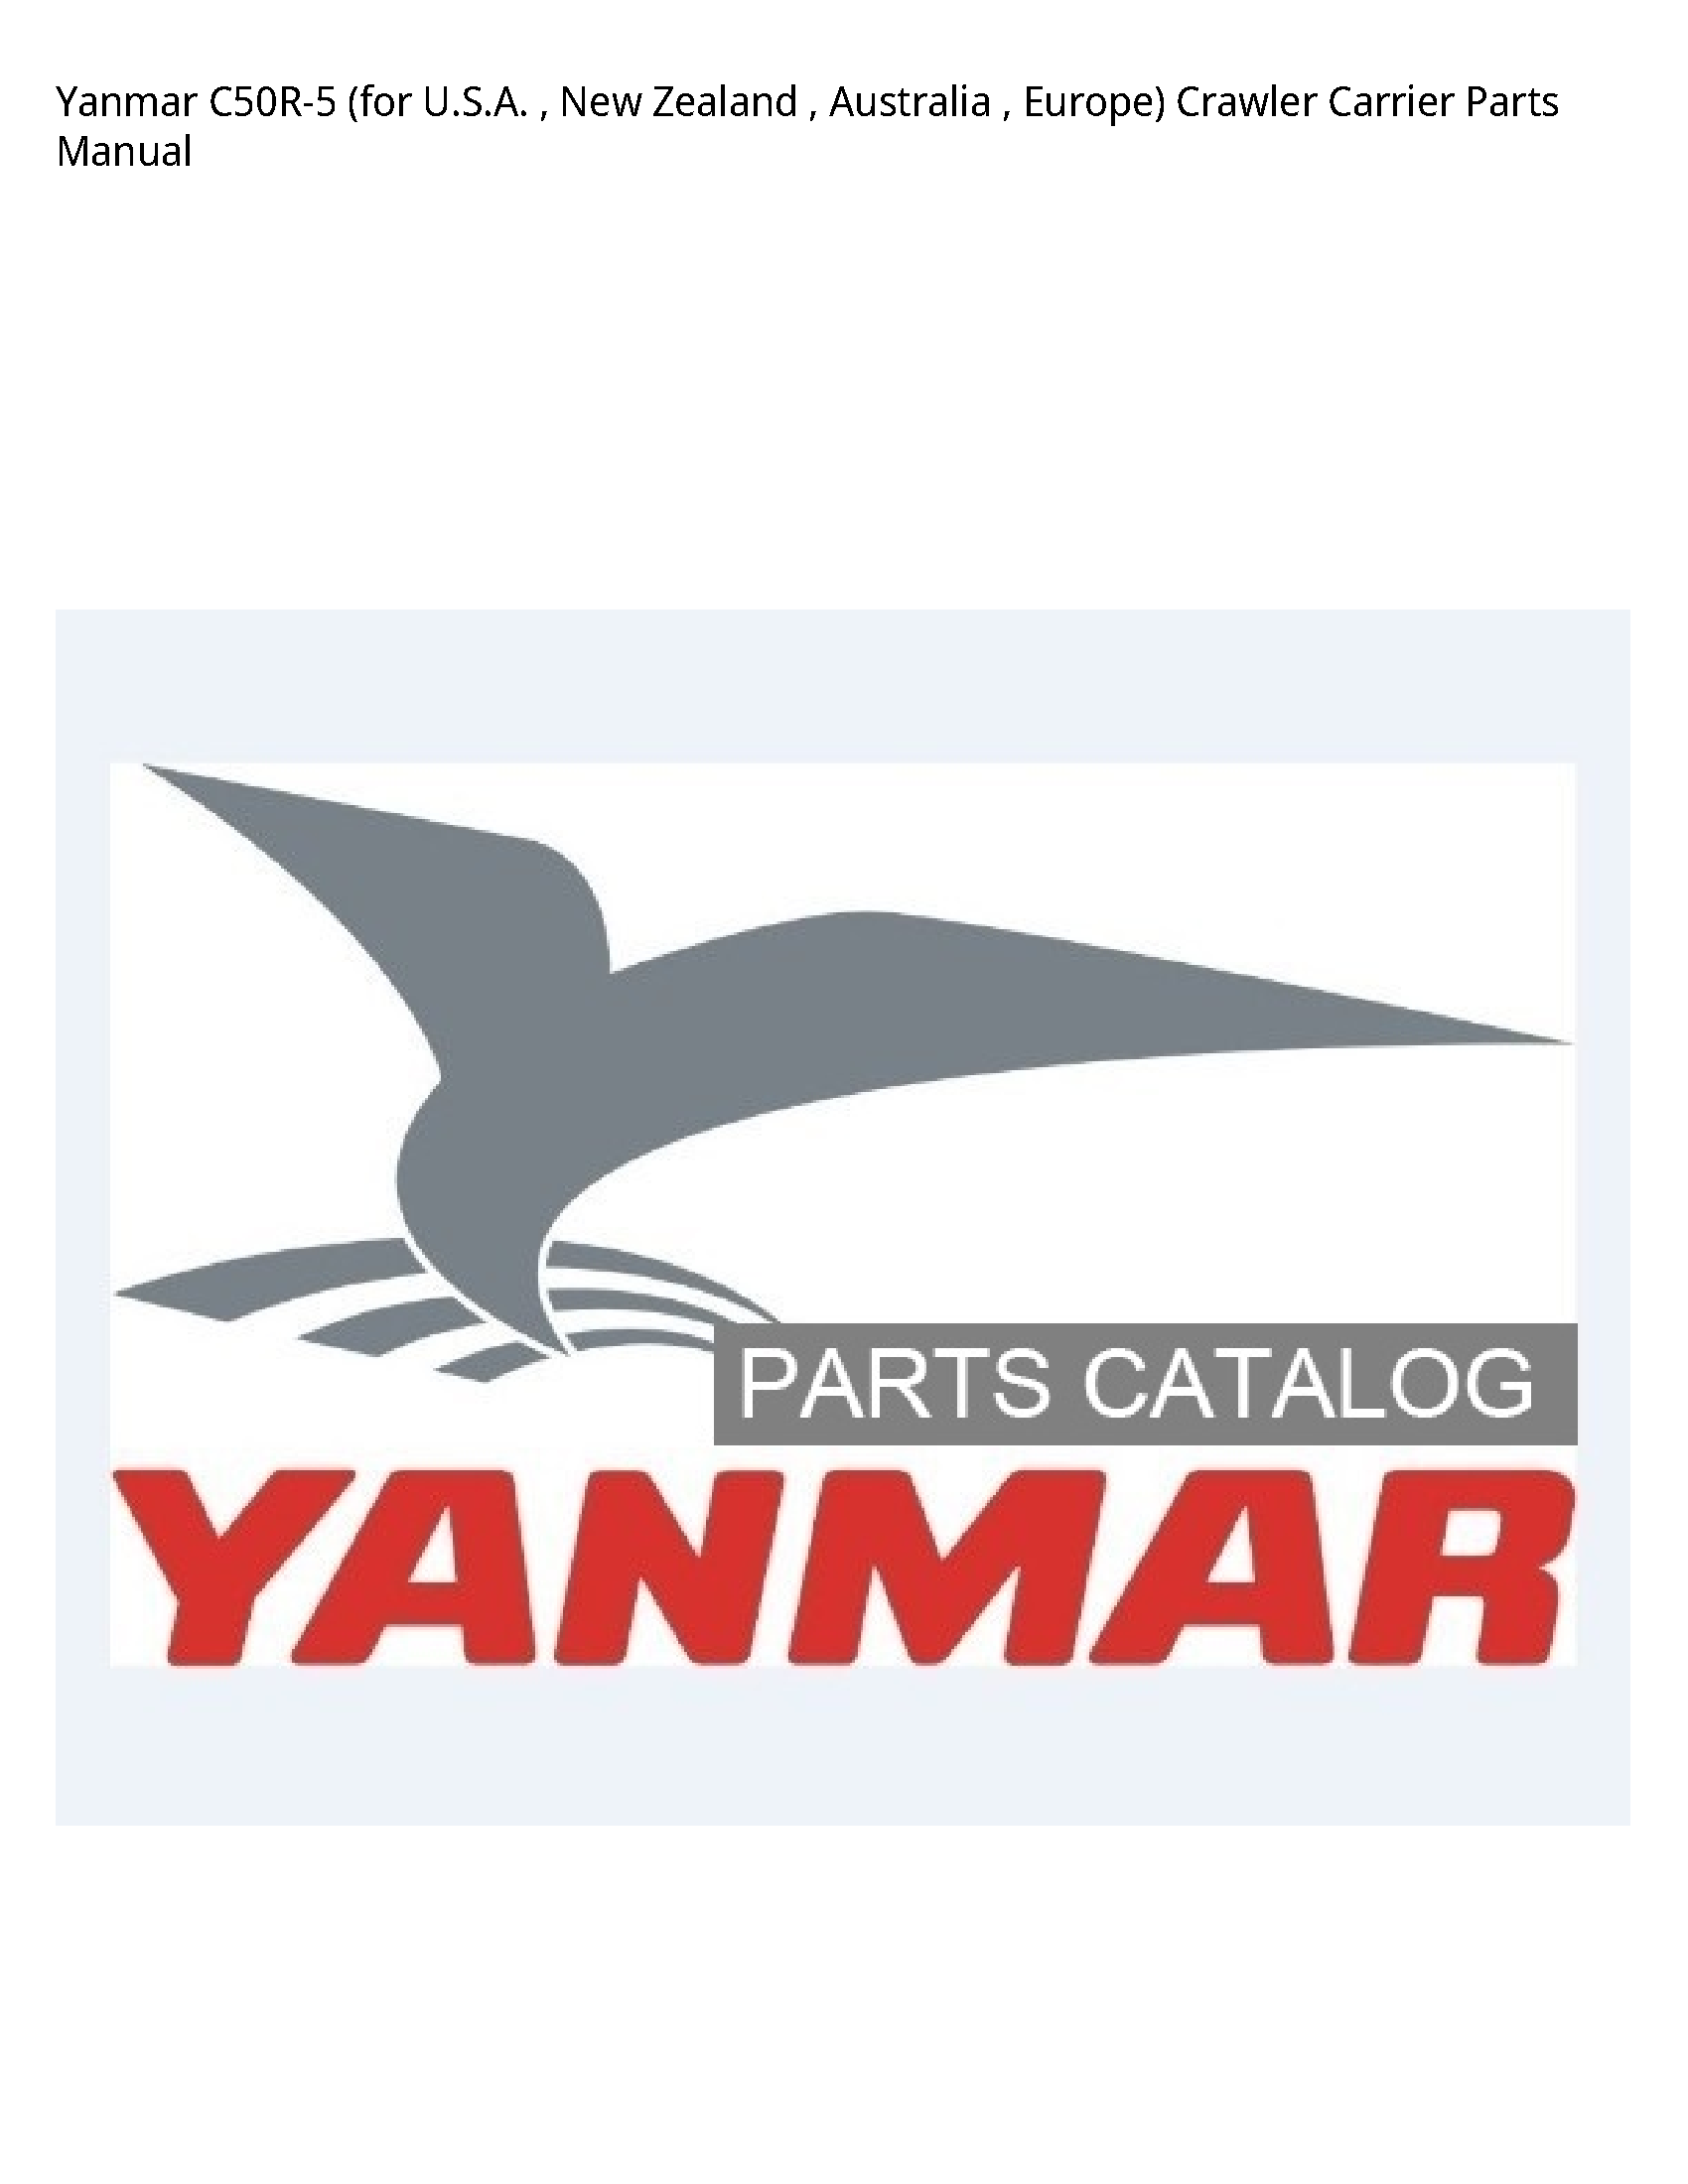 Yanmar C50R-5 (for U.S.A. New Zealand Australia Europe) Crawler Carrier Parts manual